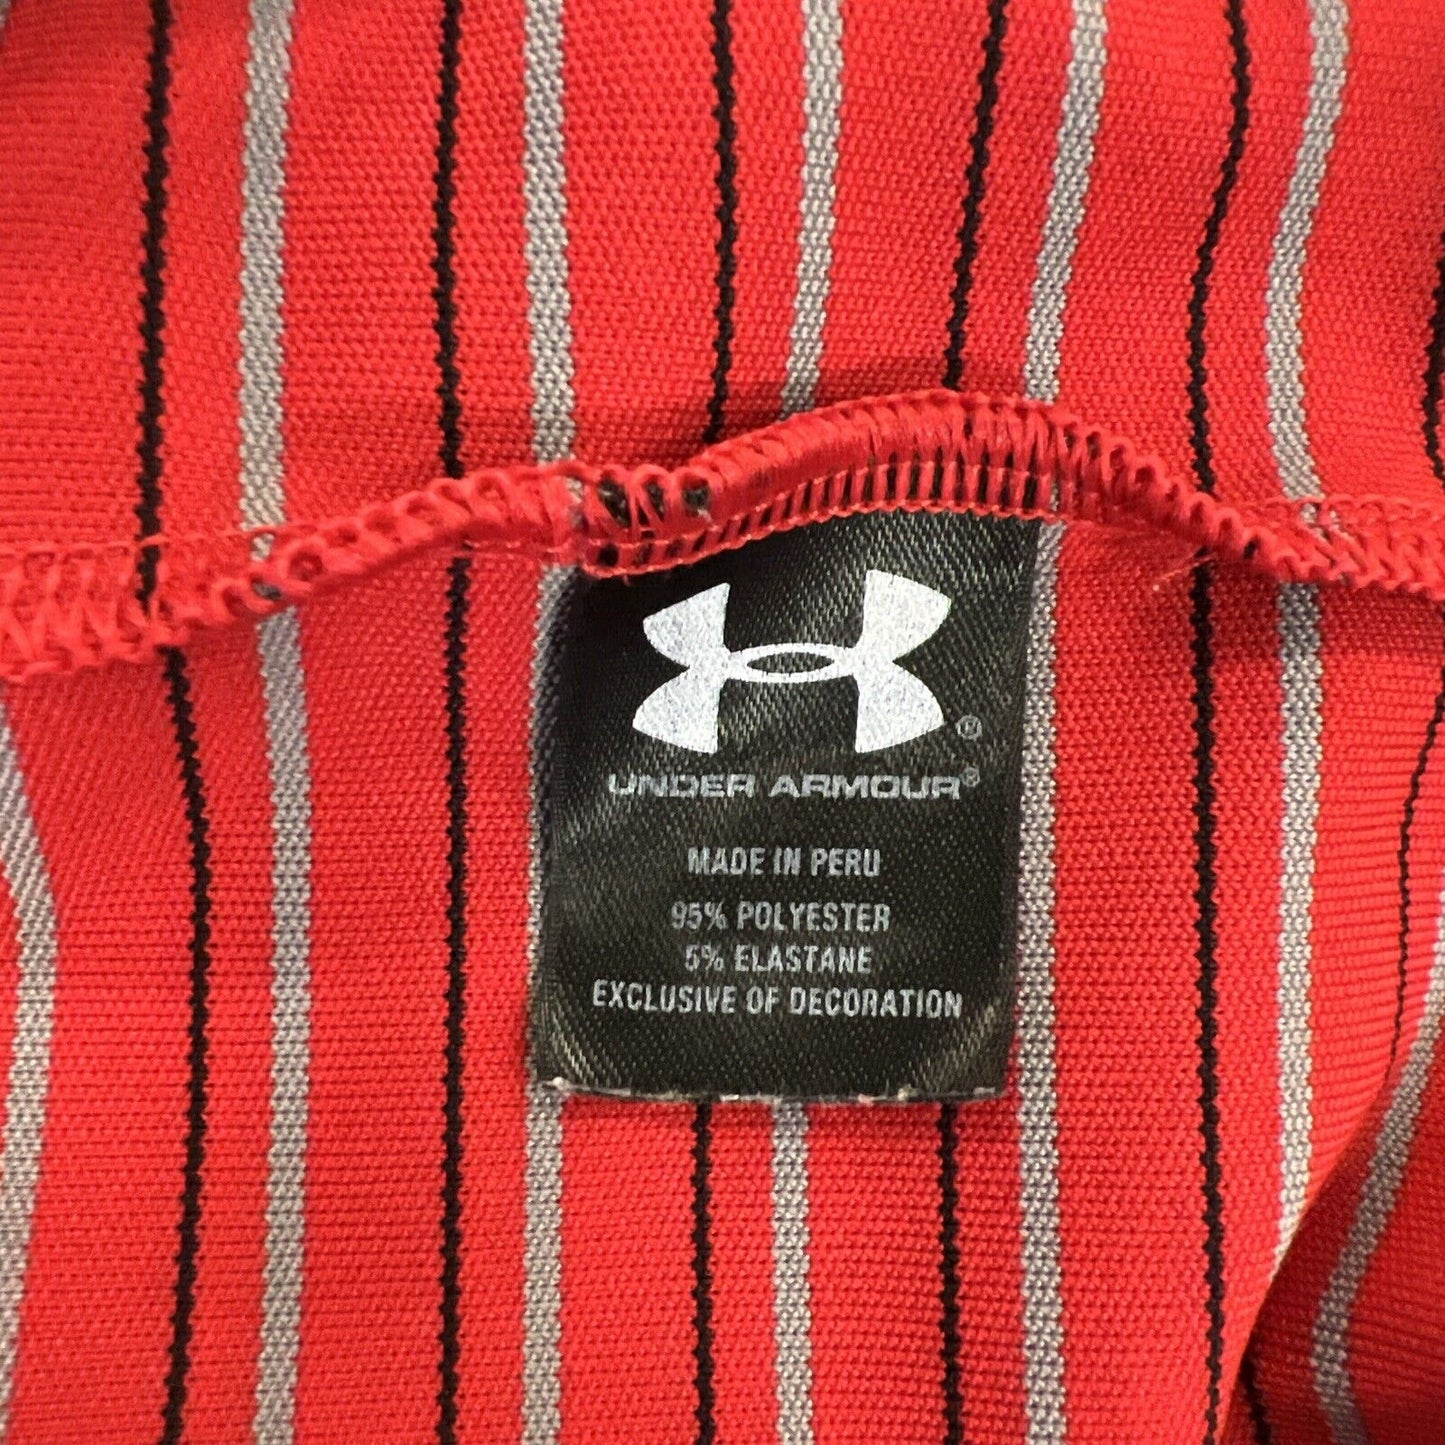 Under Armour Men's Red Striped Loose HeatGear Polo Shirt - 3XL